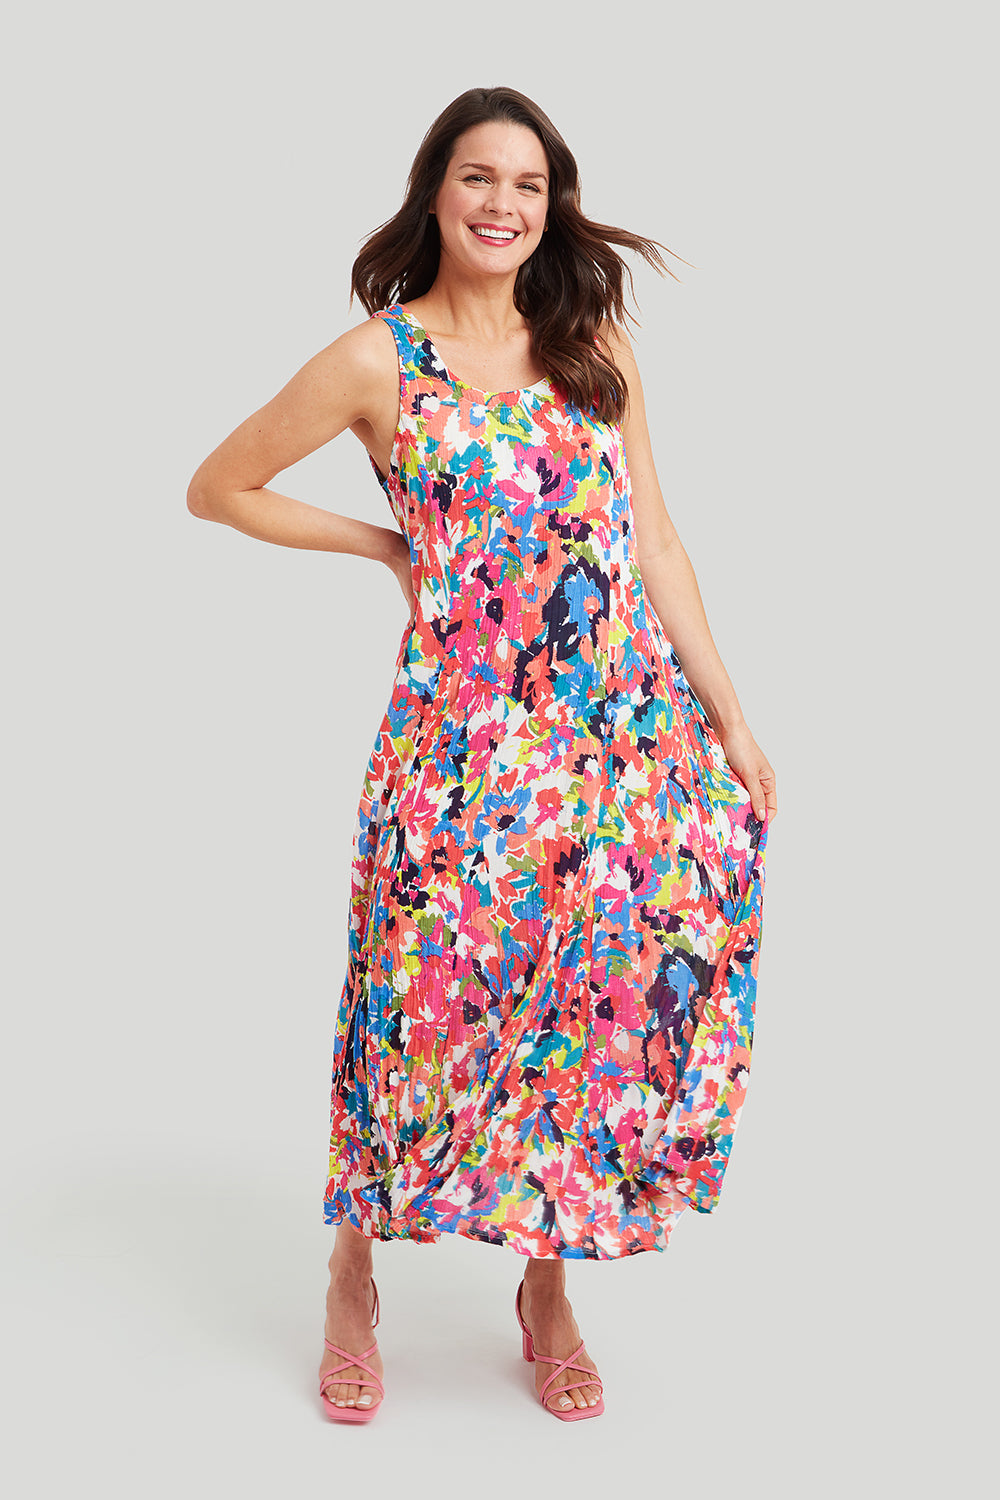 Adini Julia Carnival Print Dress - Multi